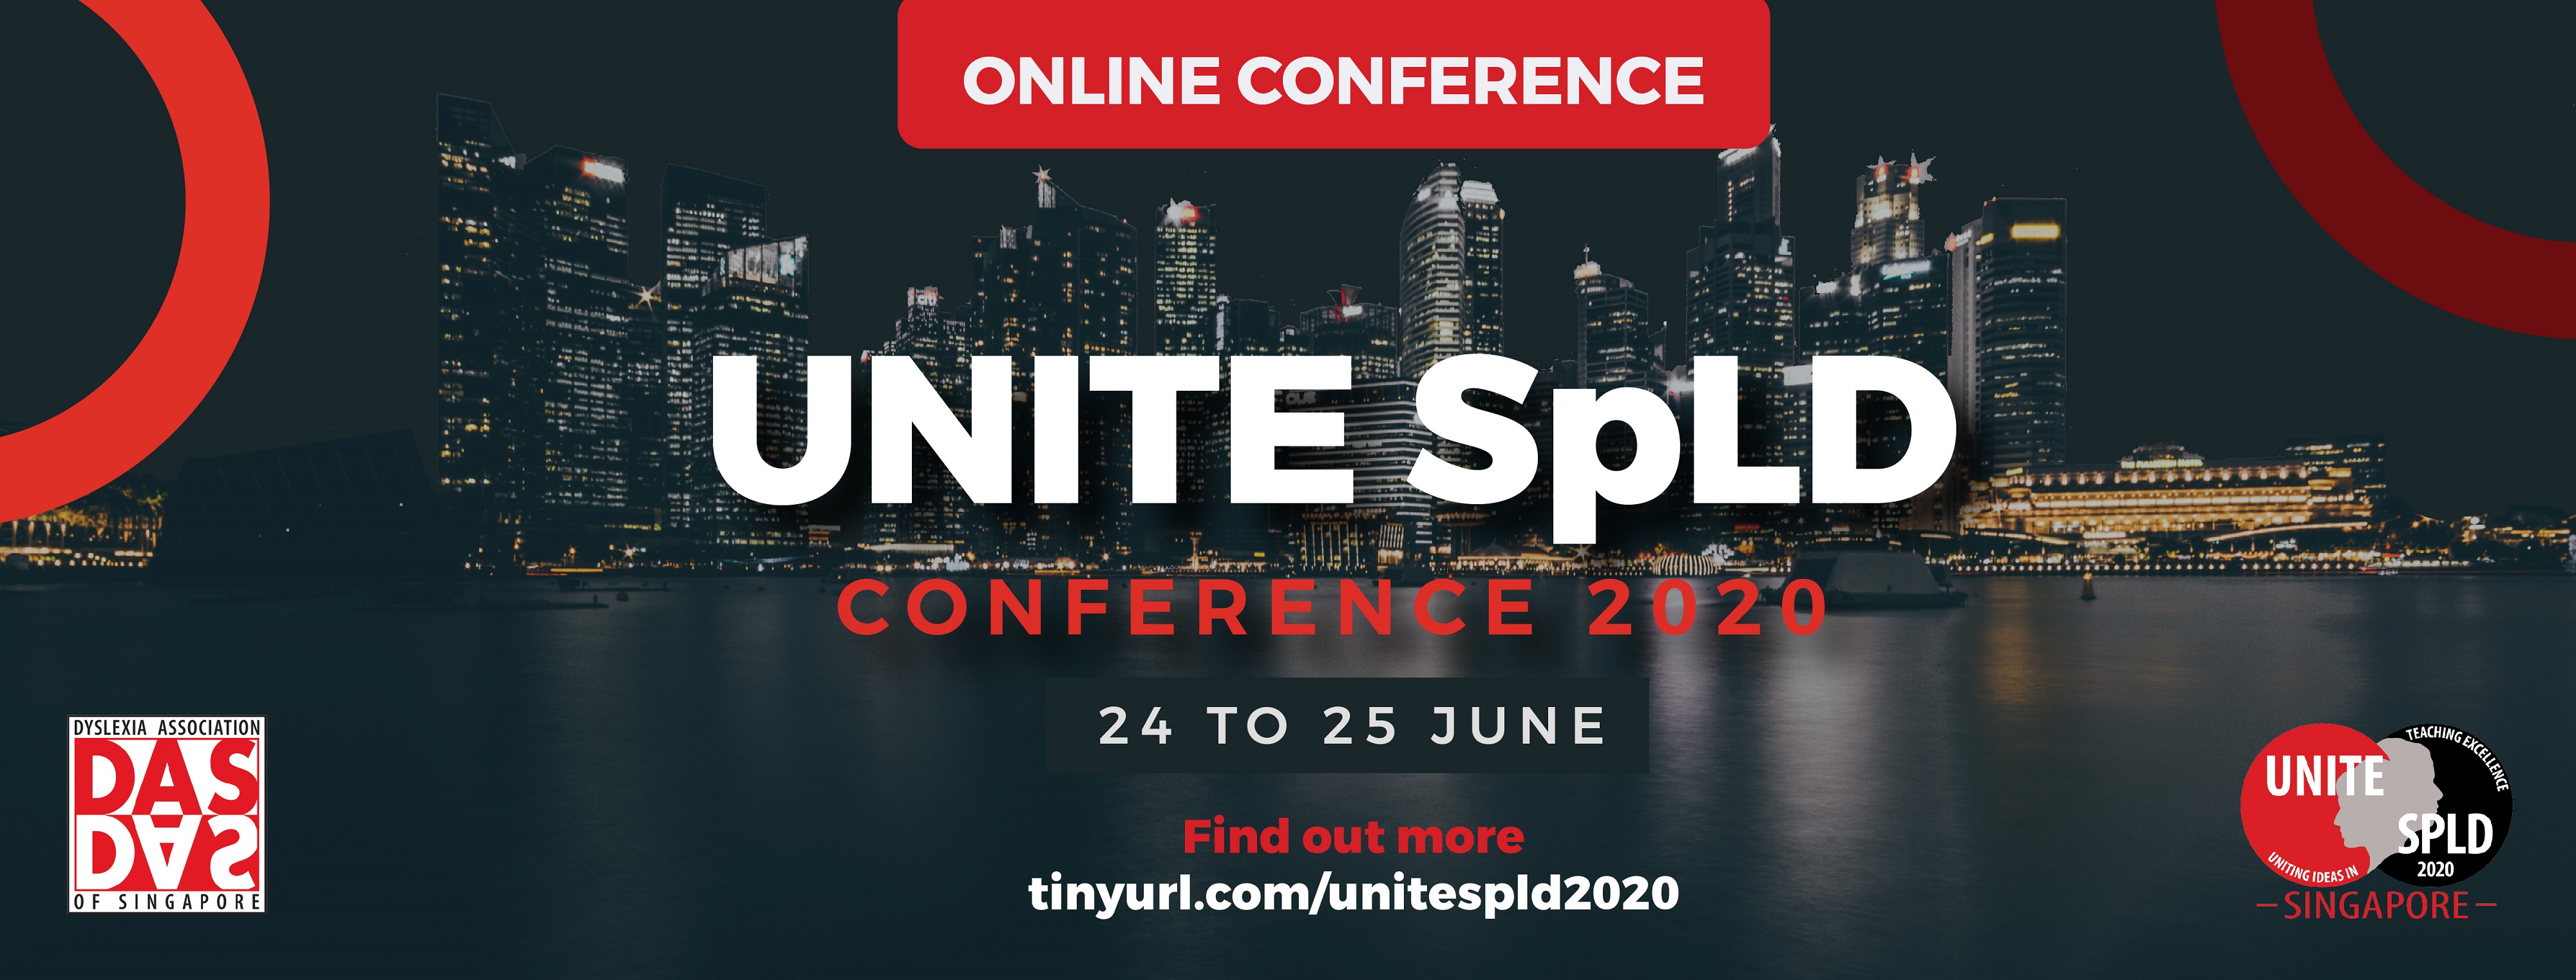 UNITE SpLD 2020, Singapore, North East, Singapore